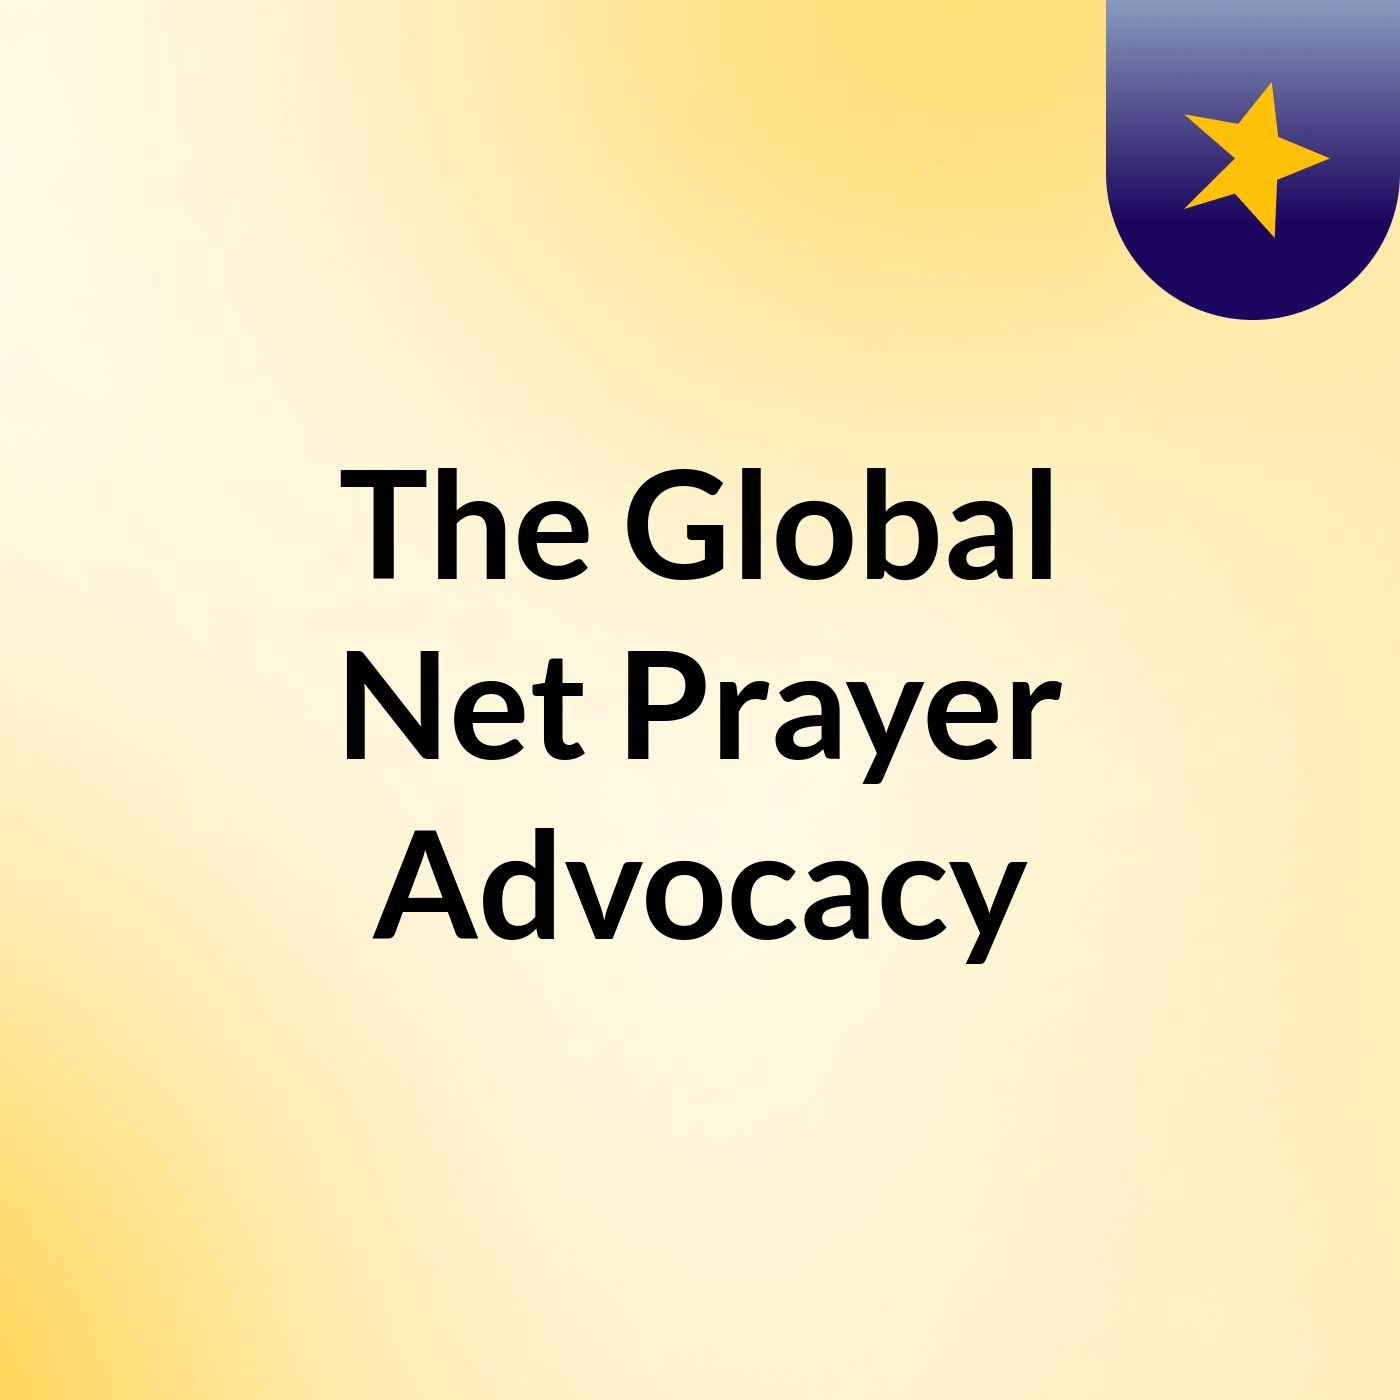 The Global Net Prayer Advocacy